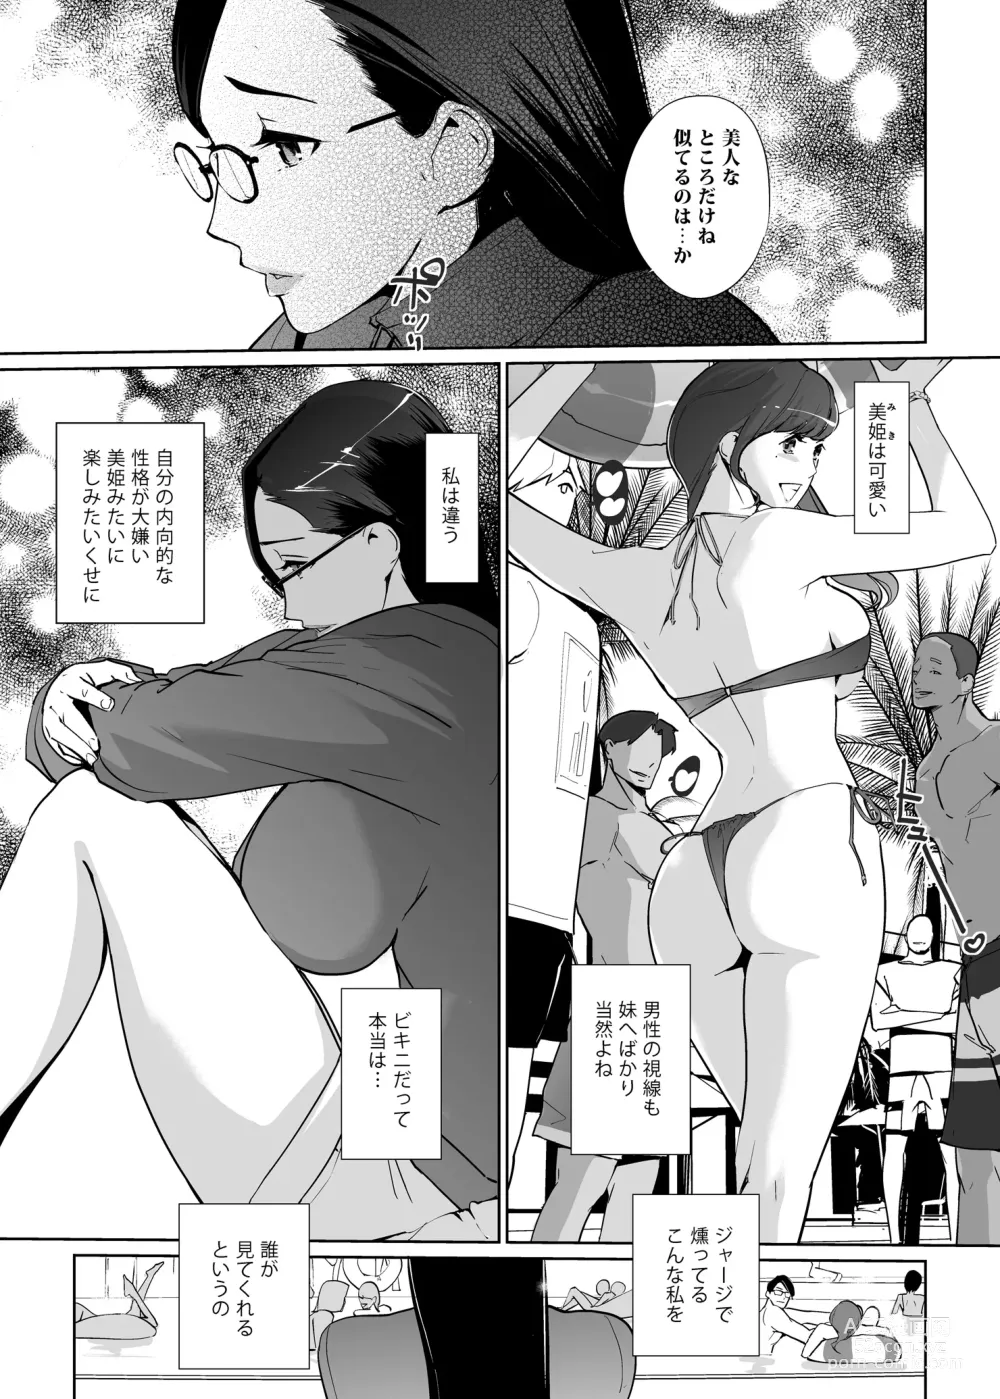 Page 7 of doujinshi NTR Midnight Pool Season 2 #1